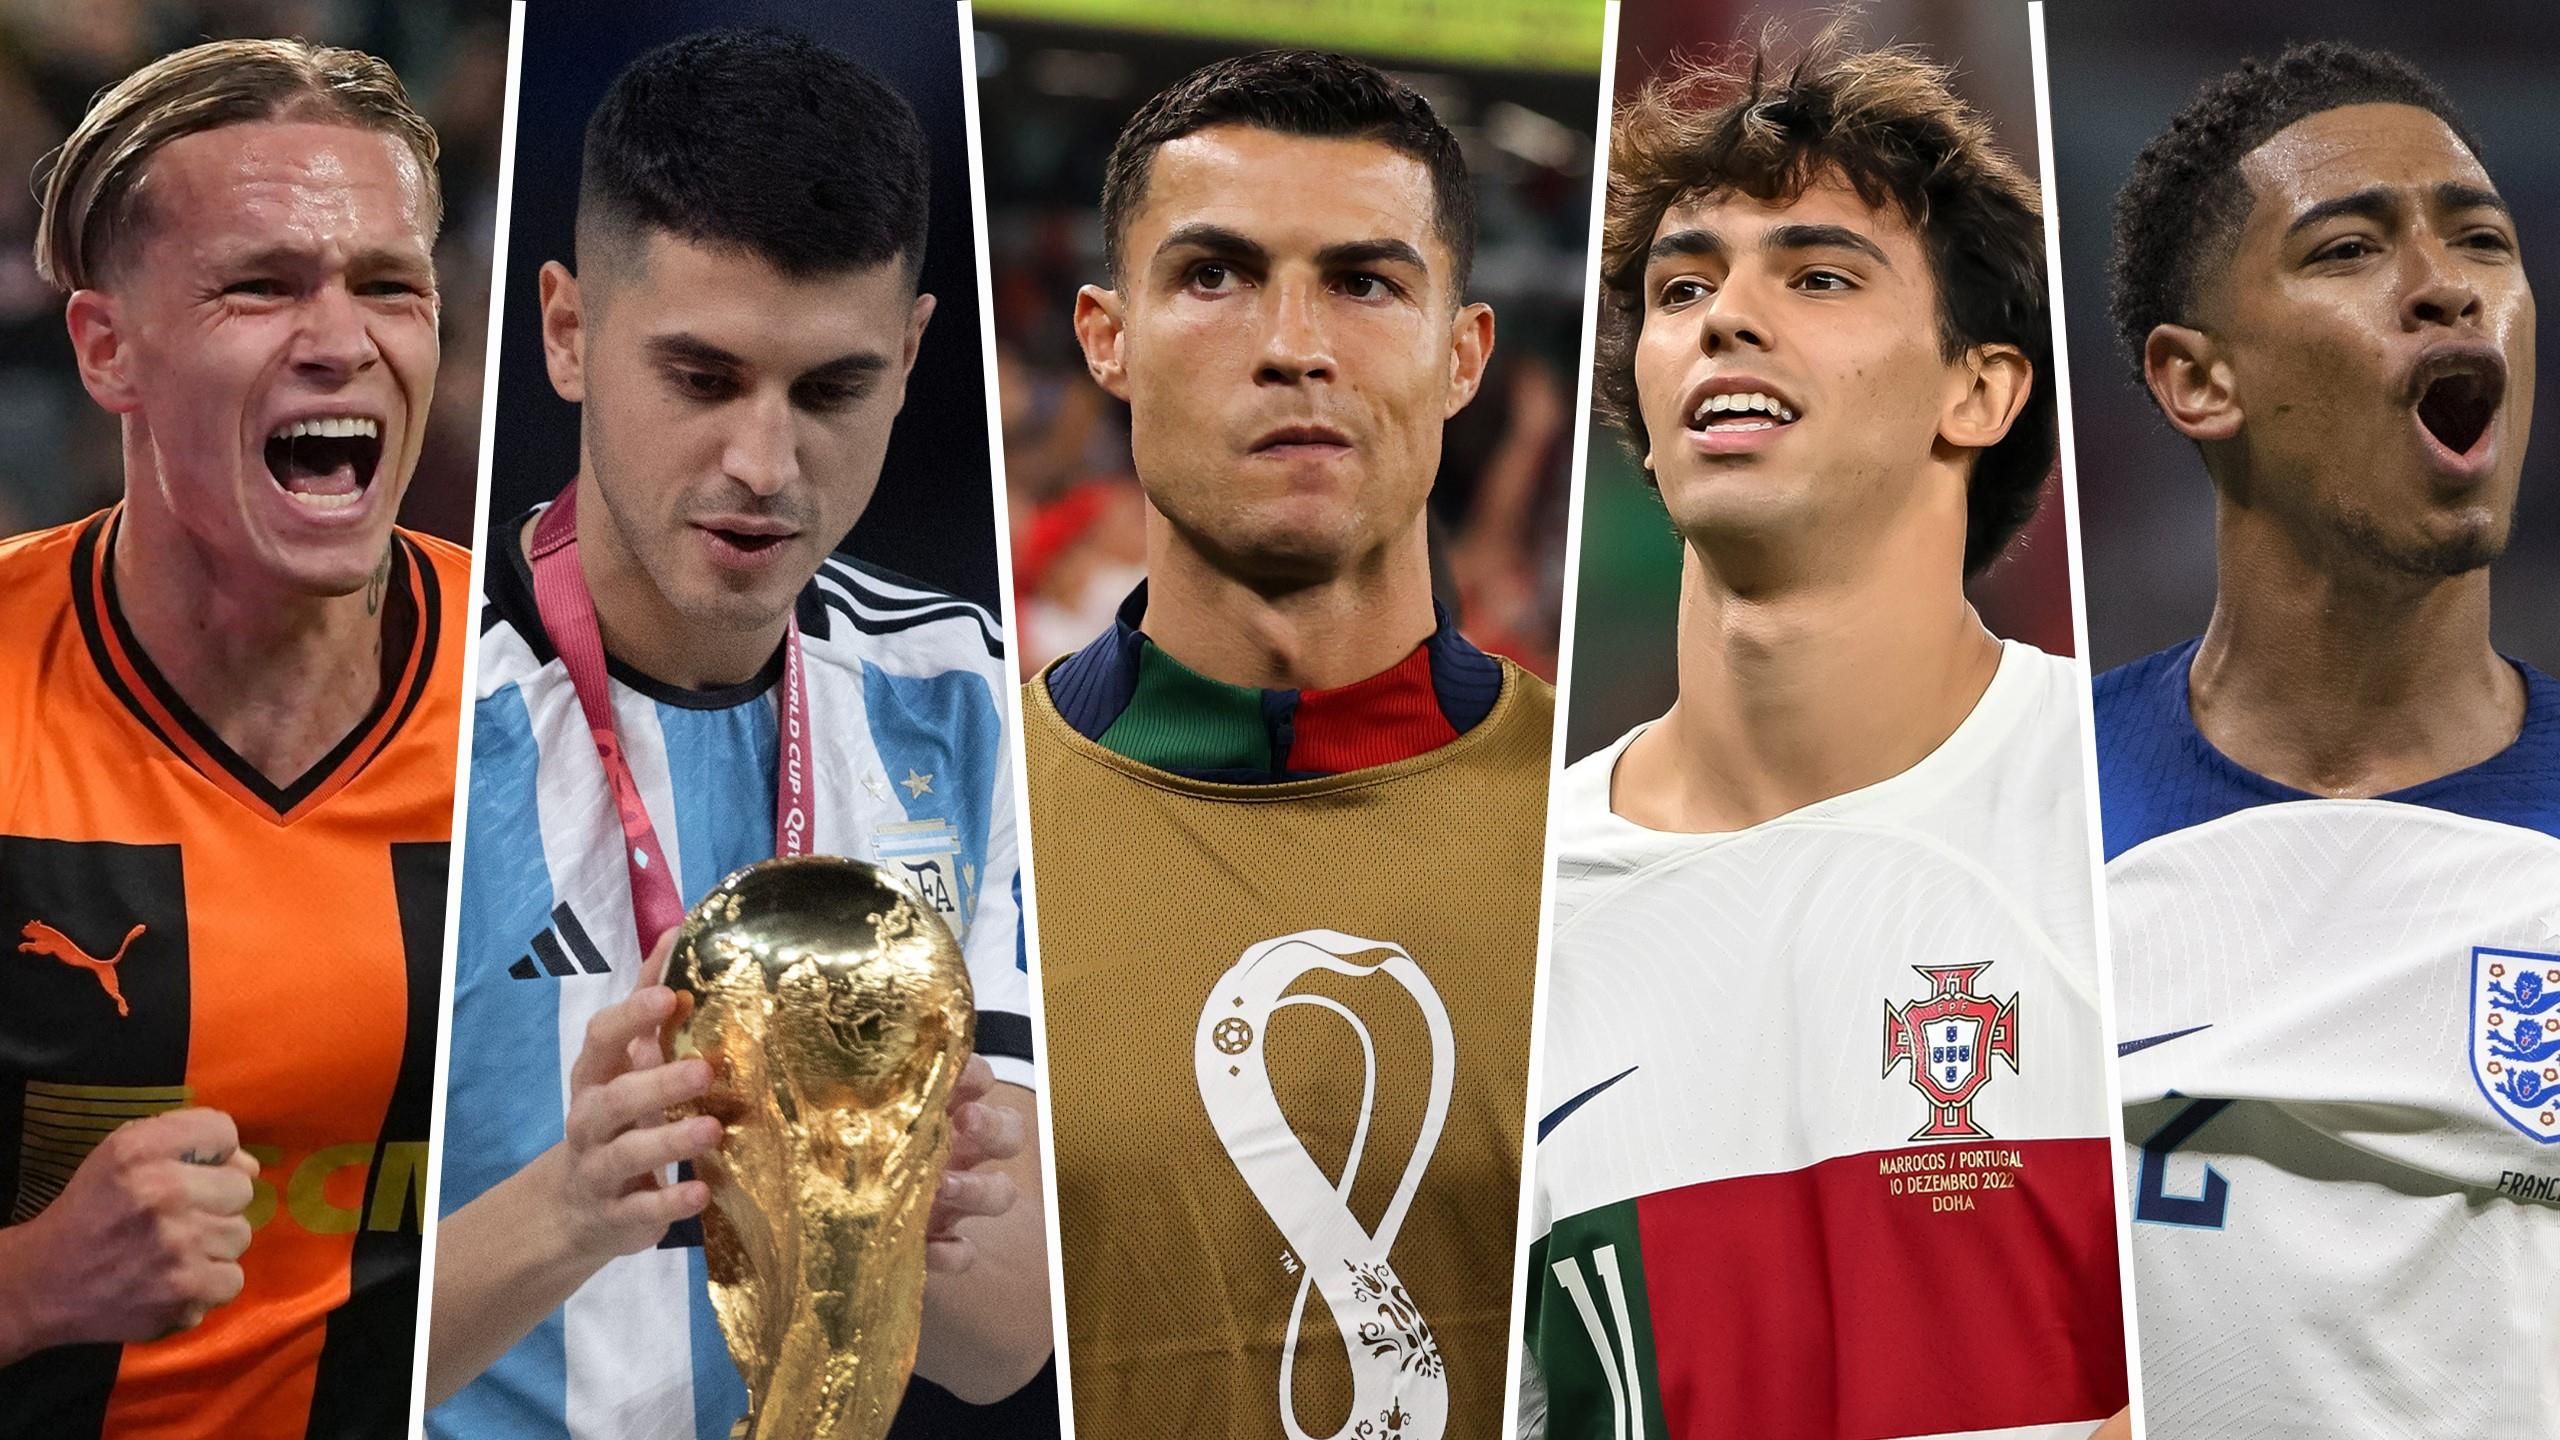 Best players in Saudi Pro League: Ranking the stars joining Cristiano  Ronaldo in Saudi Arabia for 2023-2024